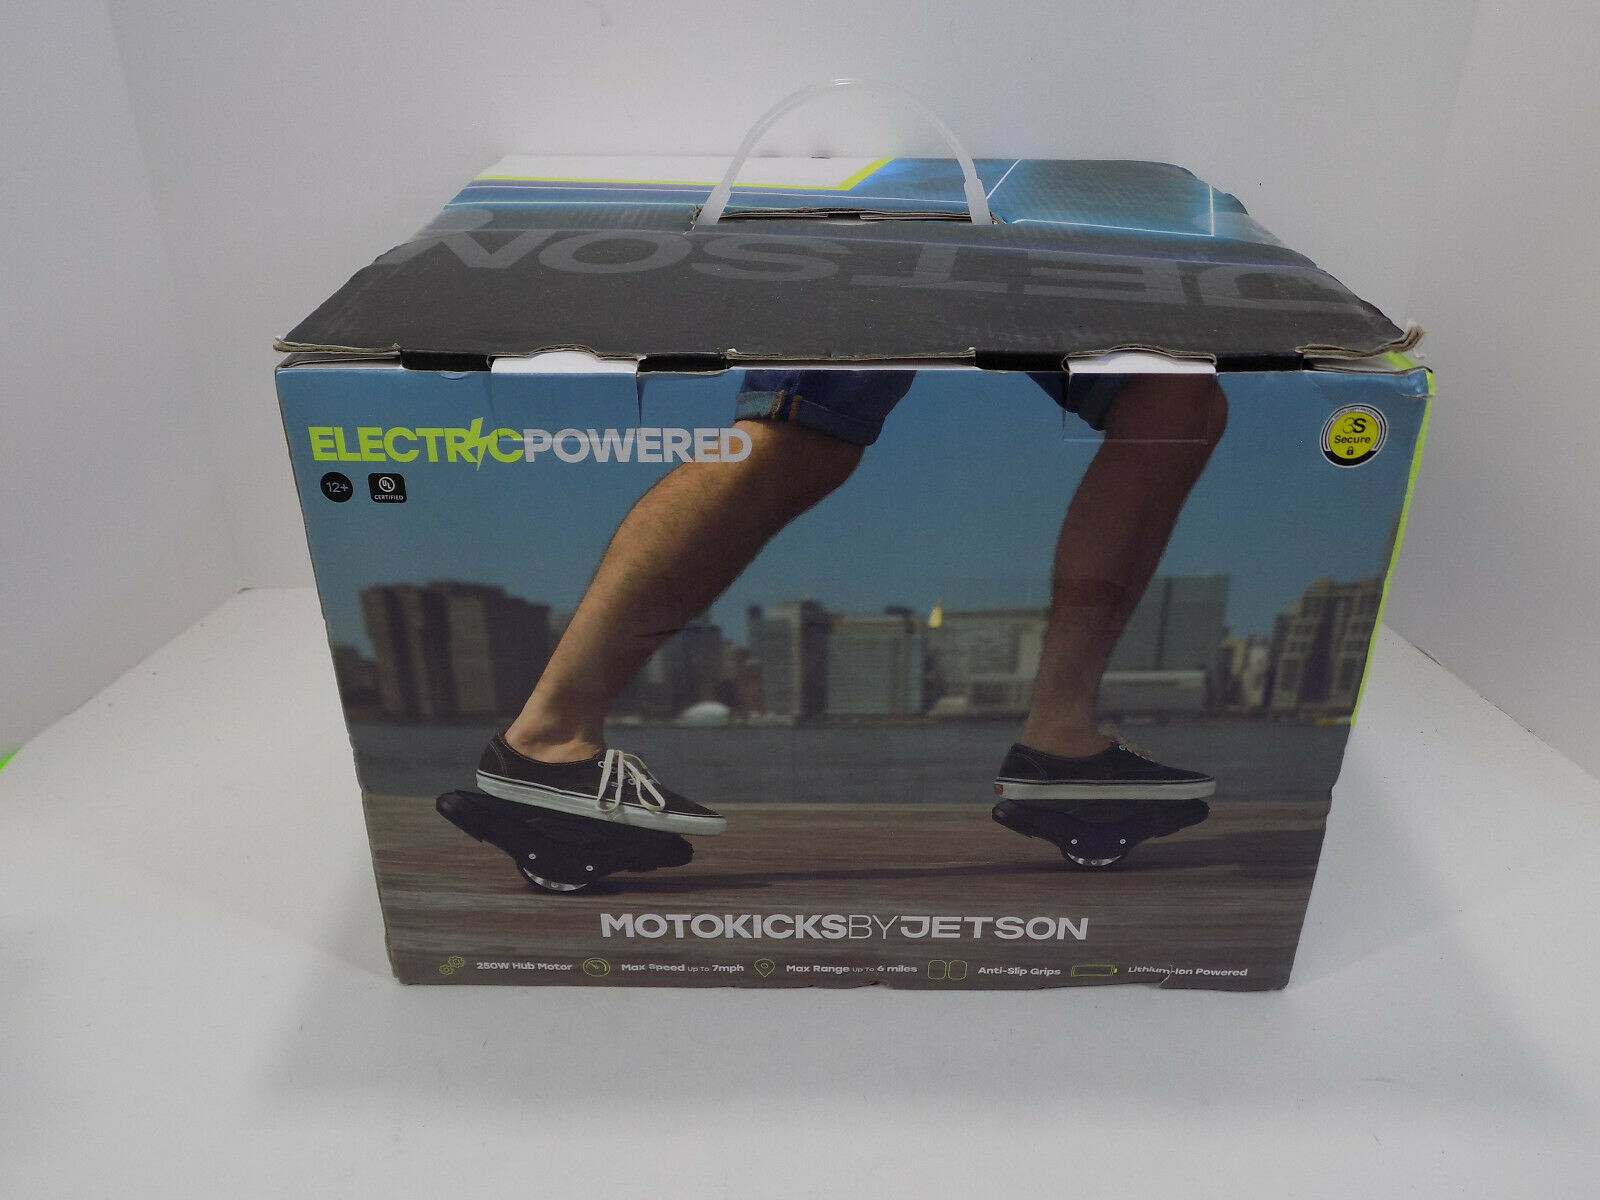 Jetson Motokicks 250W Electric Powered Hover Shoes, Black JMOTO-BLK *NEW SEALED*